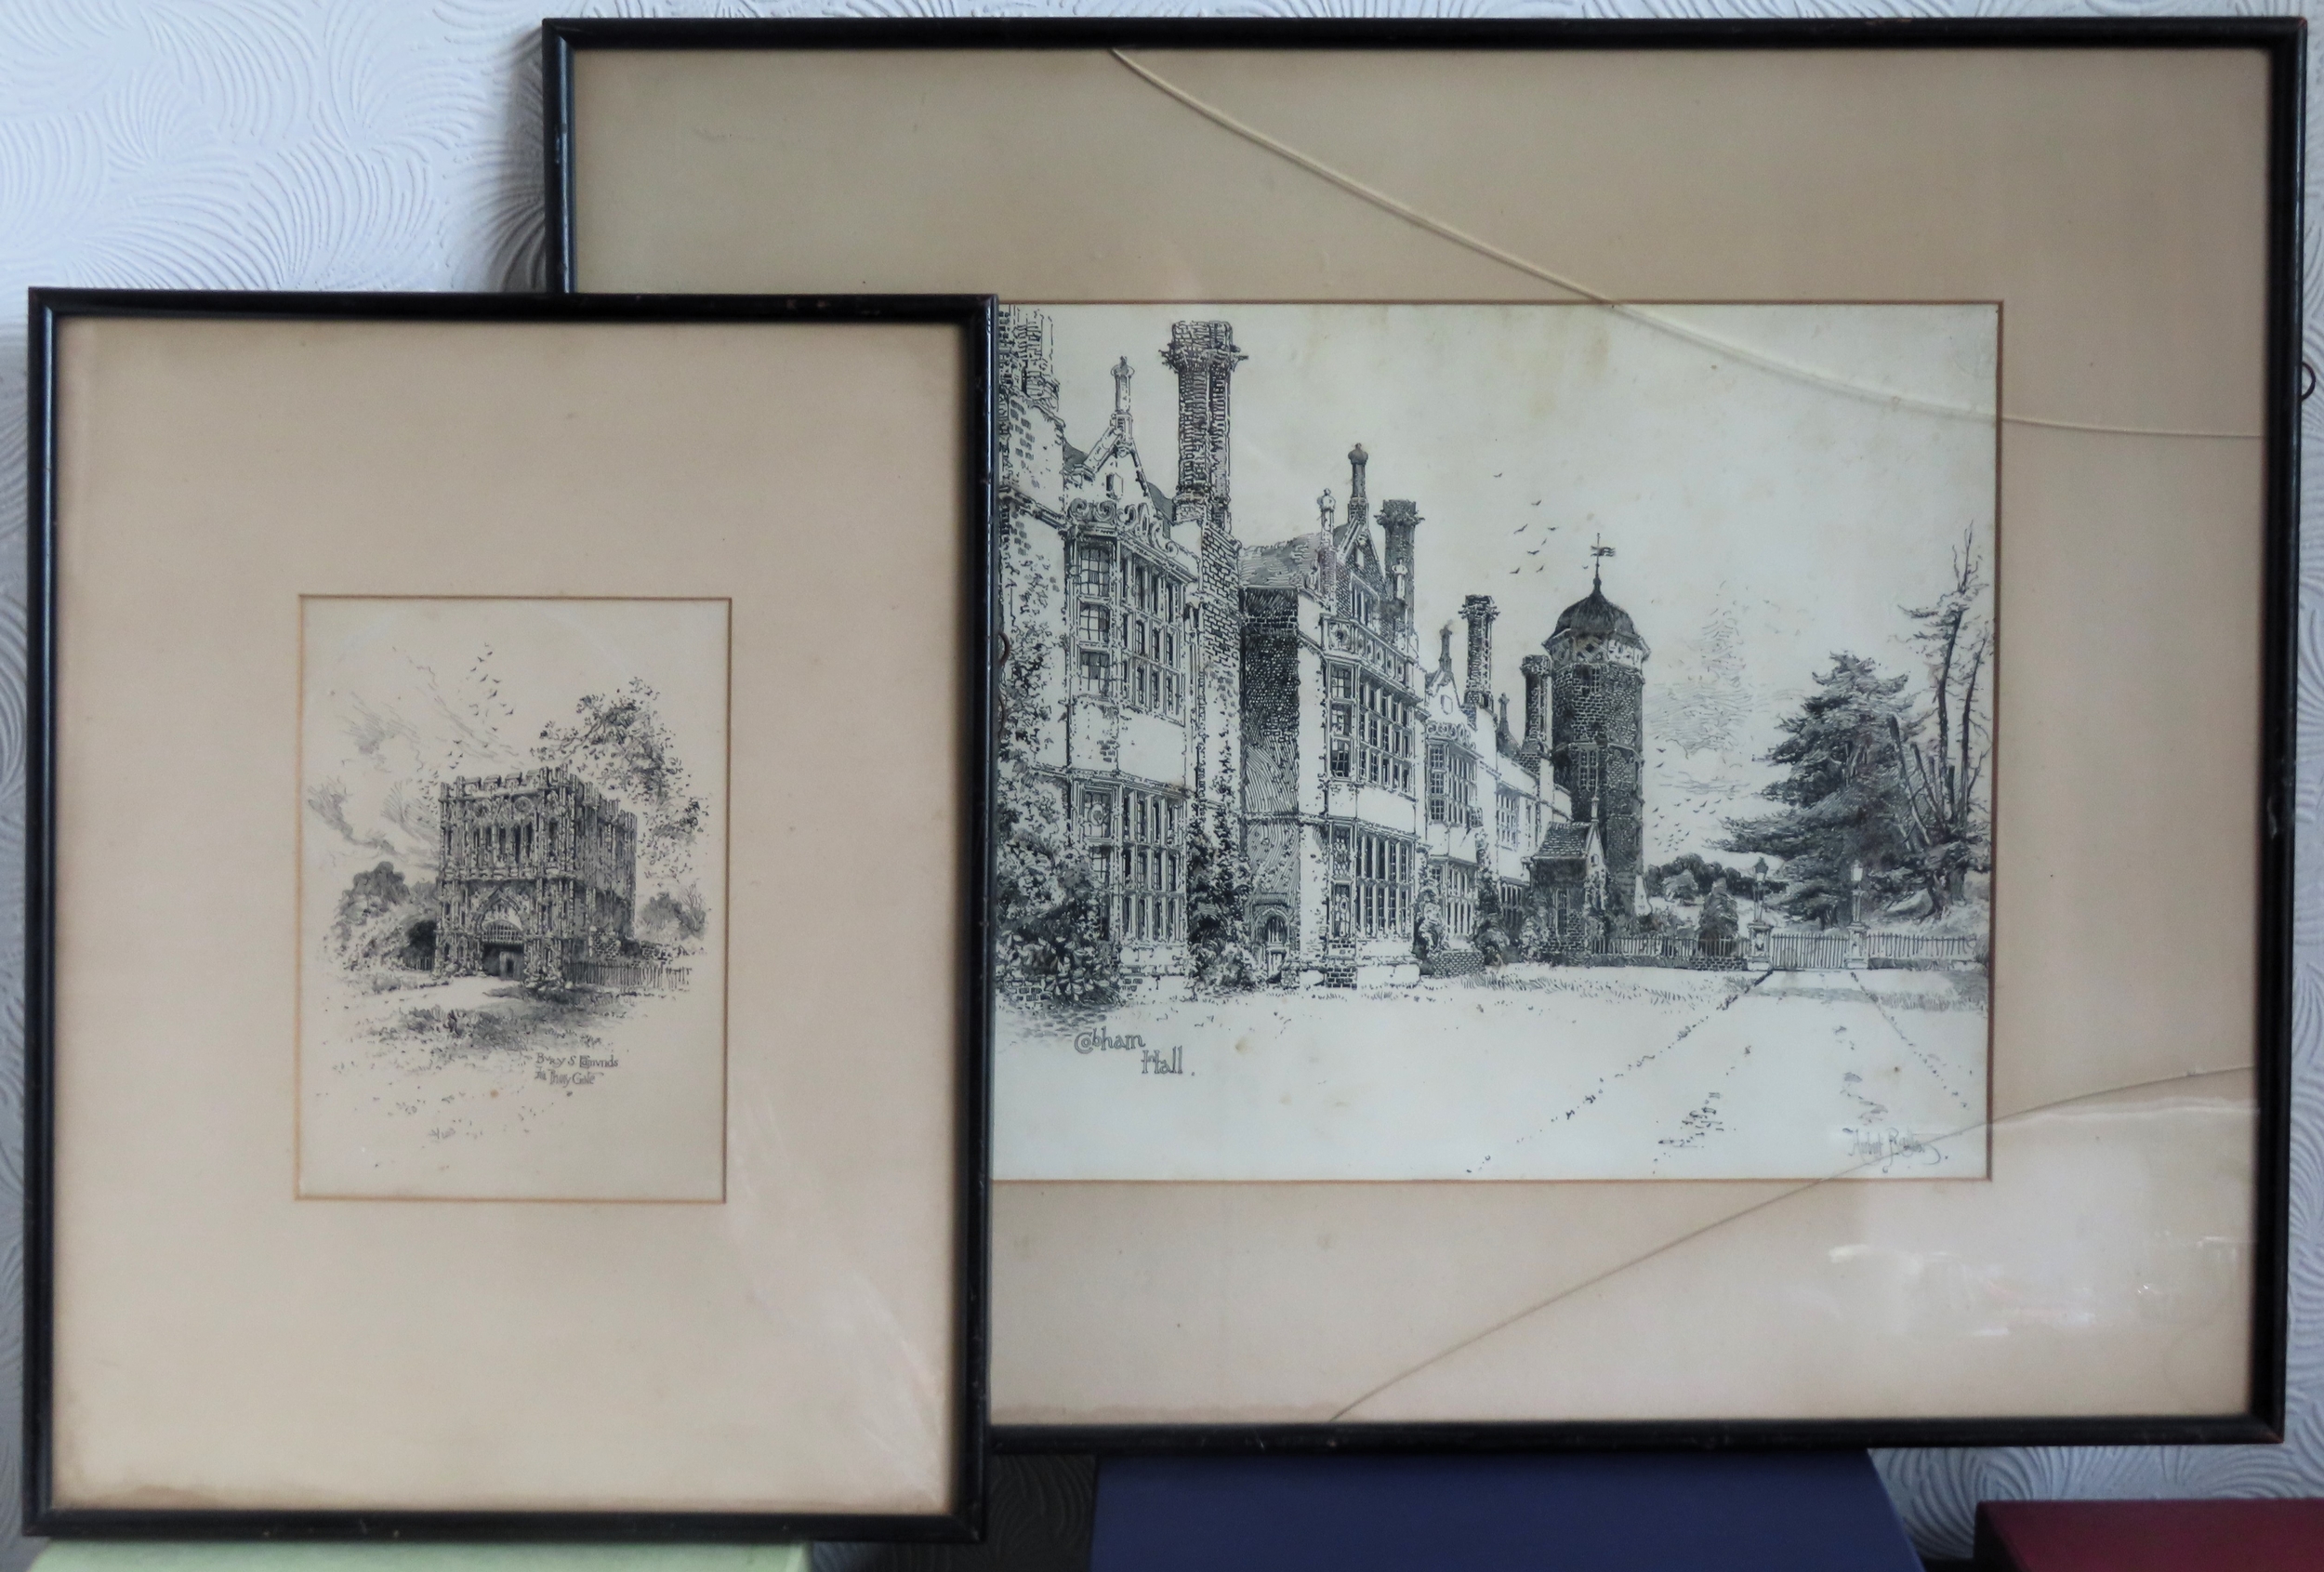 Two Herbert Railton monochrome prints - Cobham Hall & Bury St Edmunds, The Priory Gate. Largest